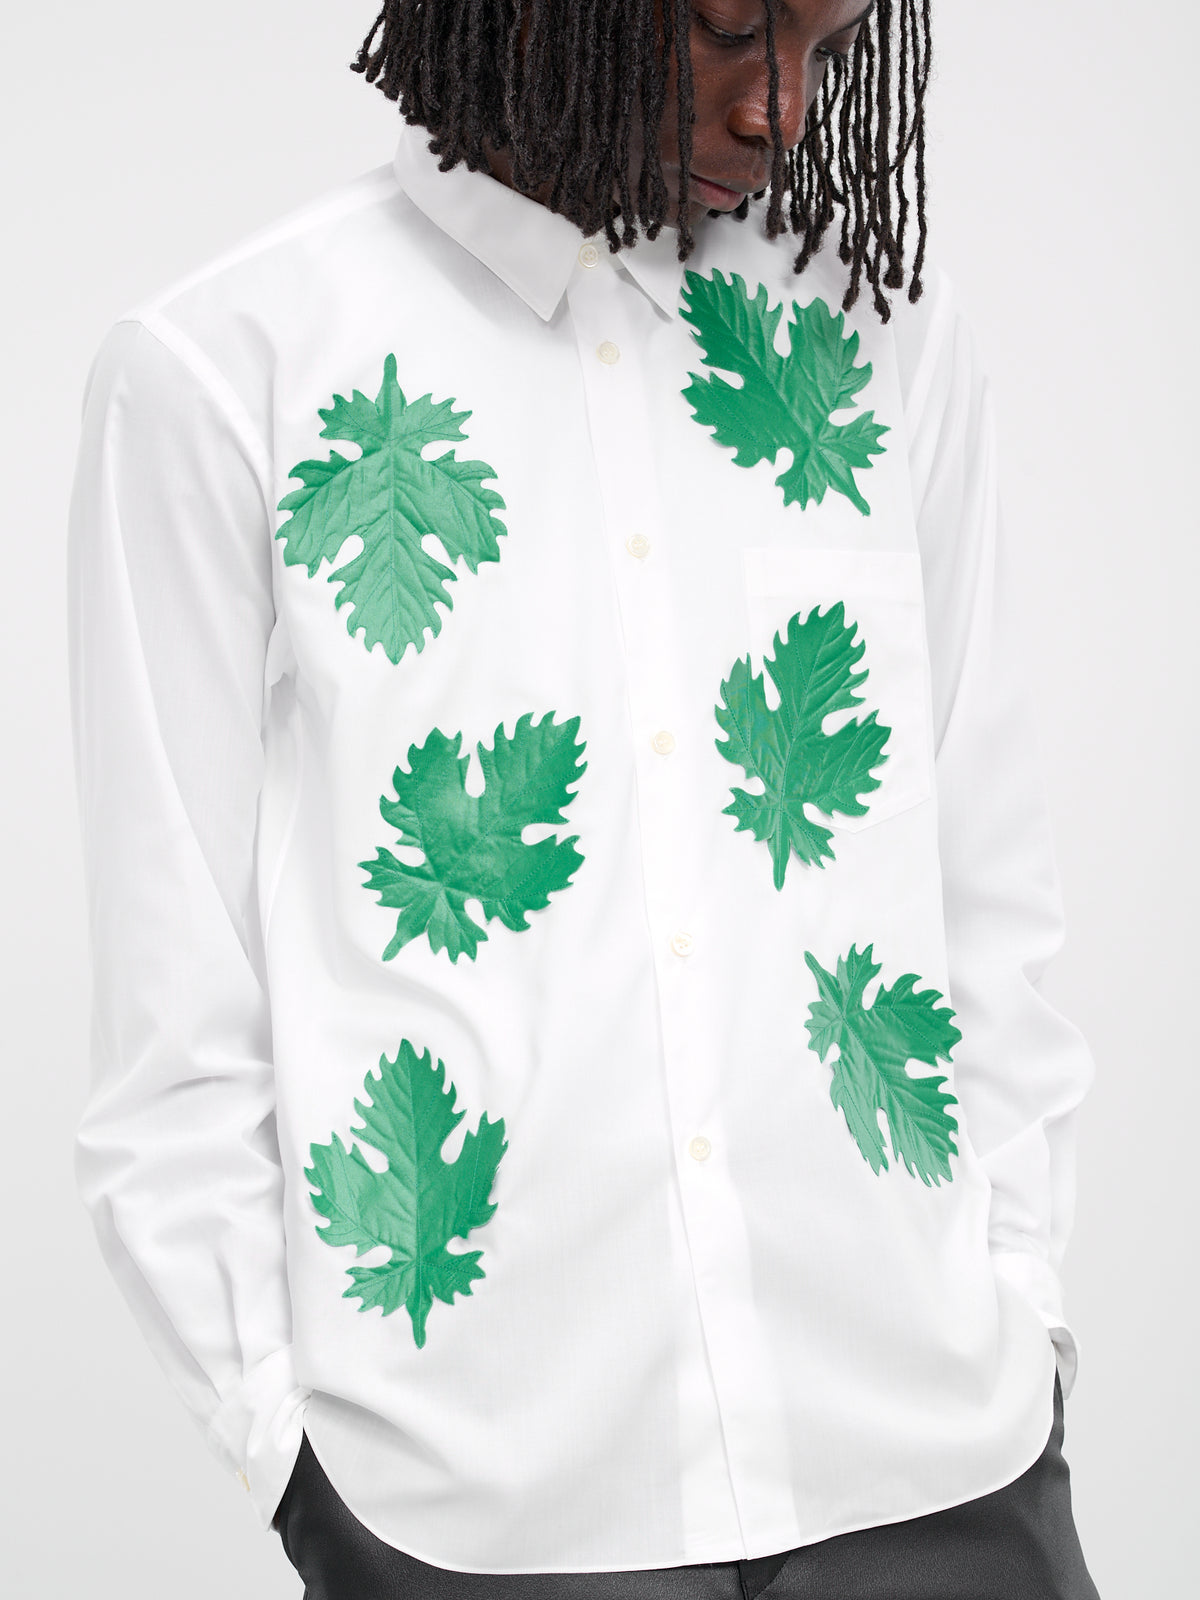 Leaf Embroidered Shirt (PM-B017-WHITE-GREEN)